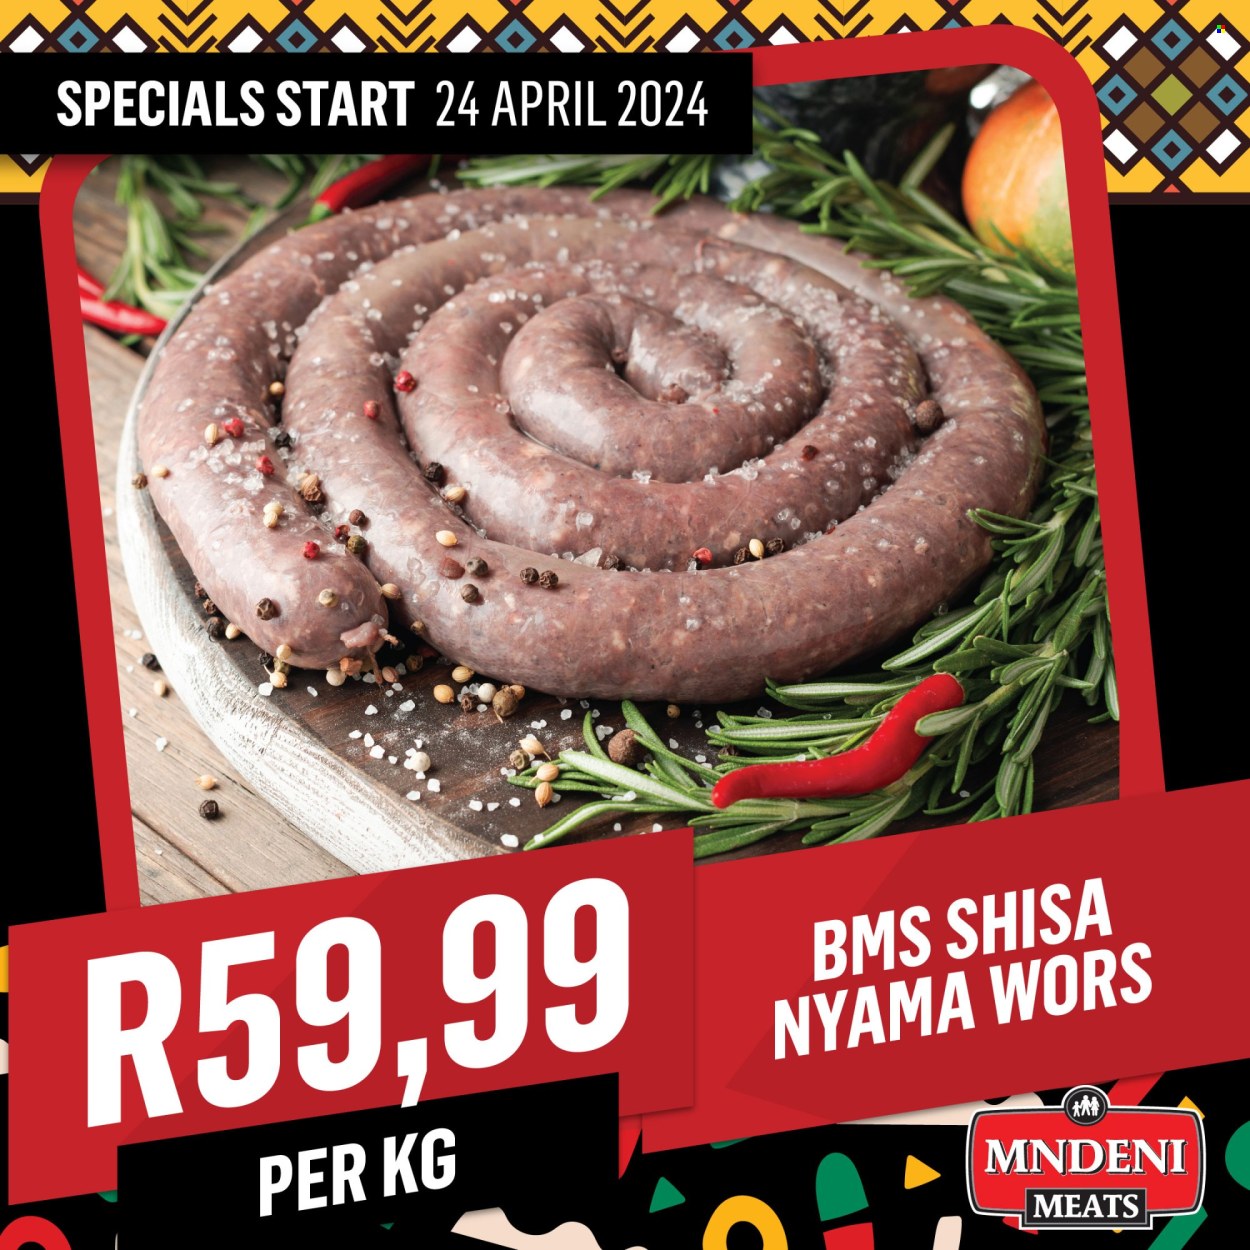 Mndeni Meats specials. 